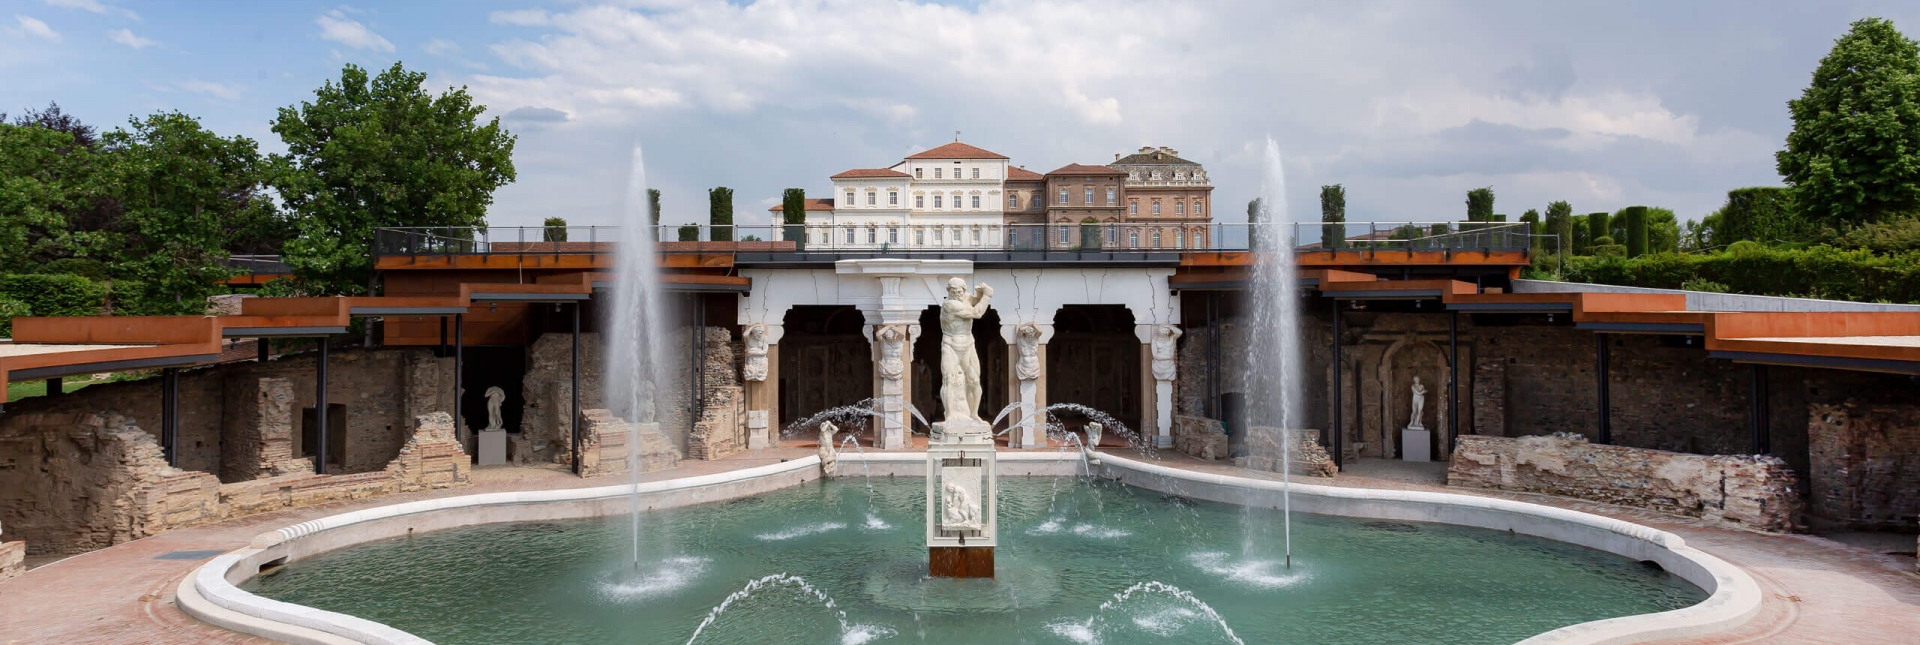 La Fontana d'Ercole - Foto di Paolo Rubino